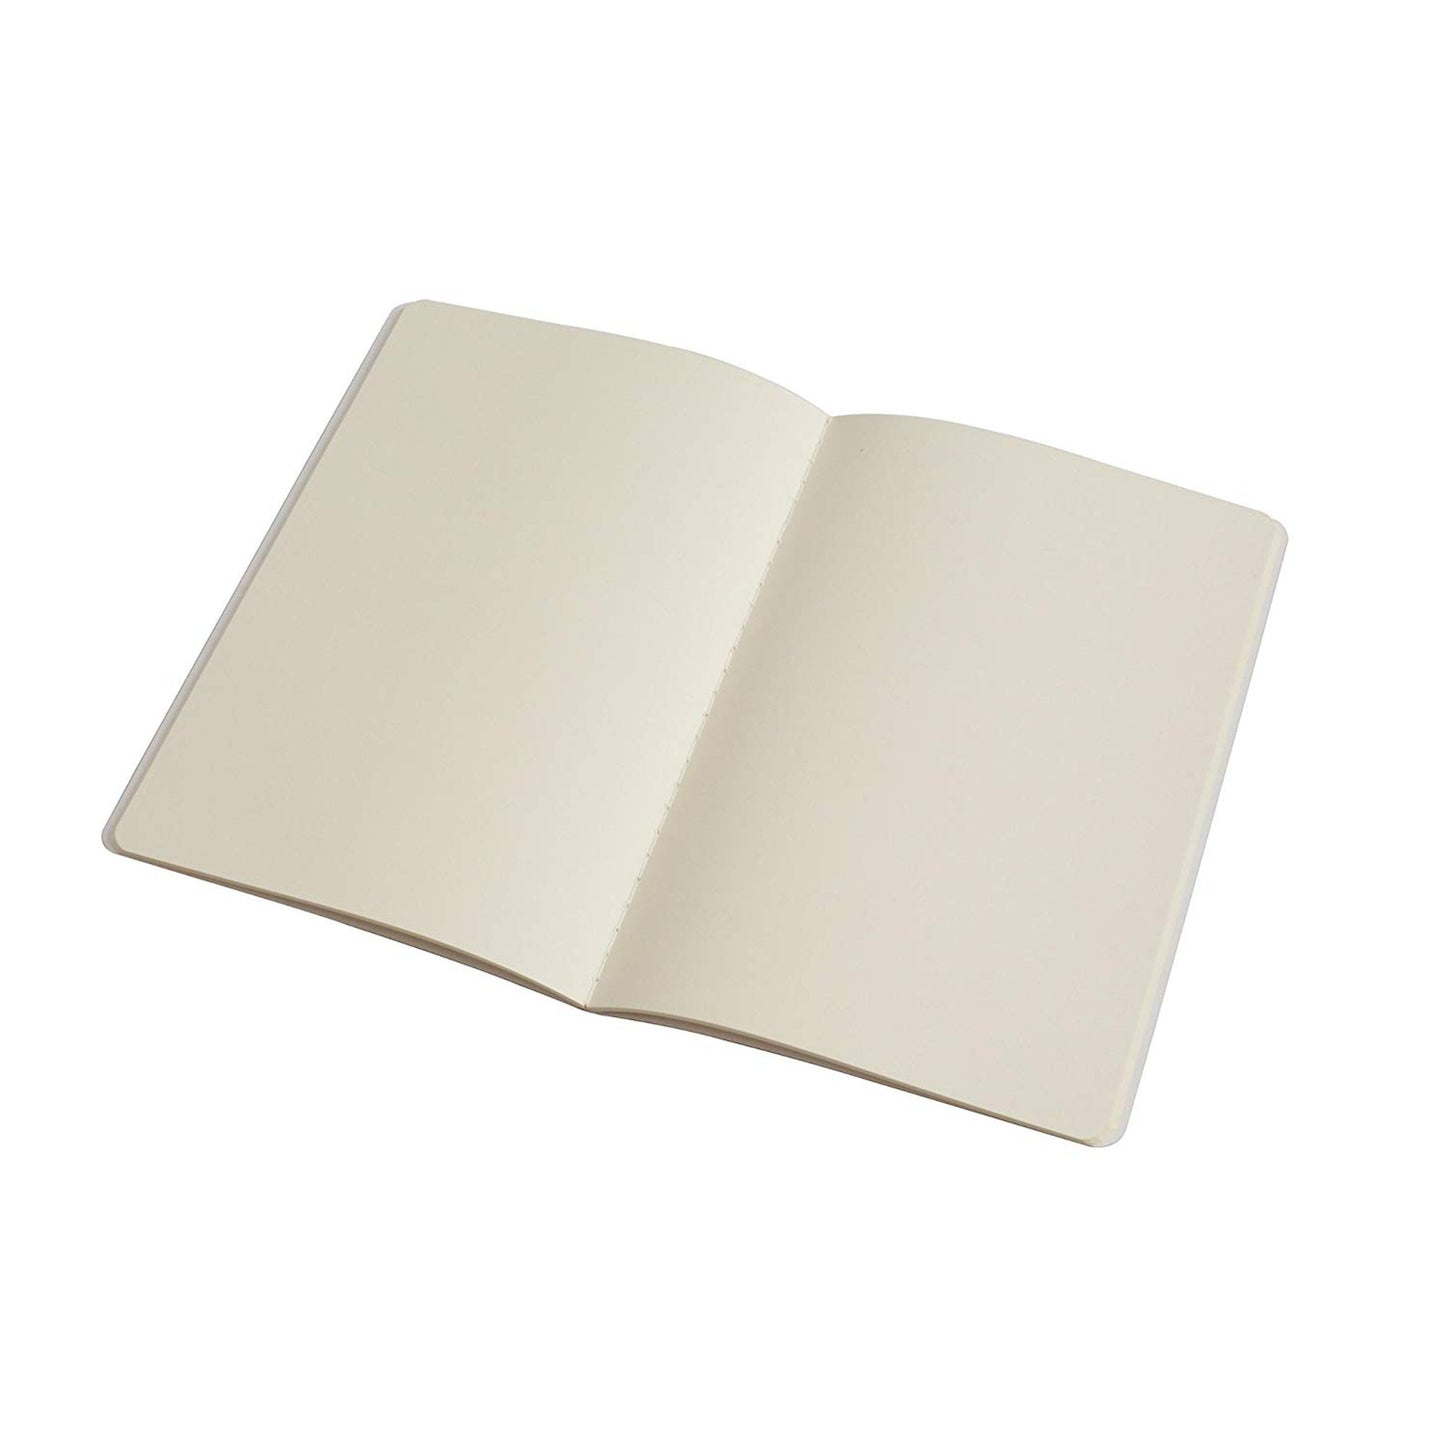 PinkPolish Design Notebook "Manticorn" Notebook / Sketchbook / Journal